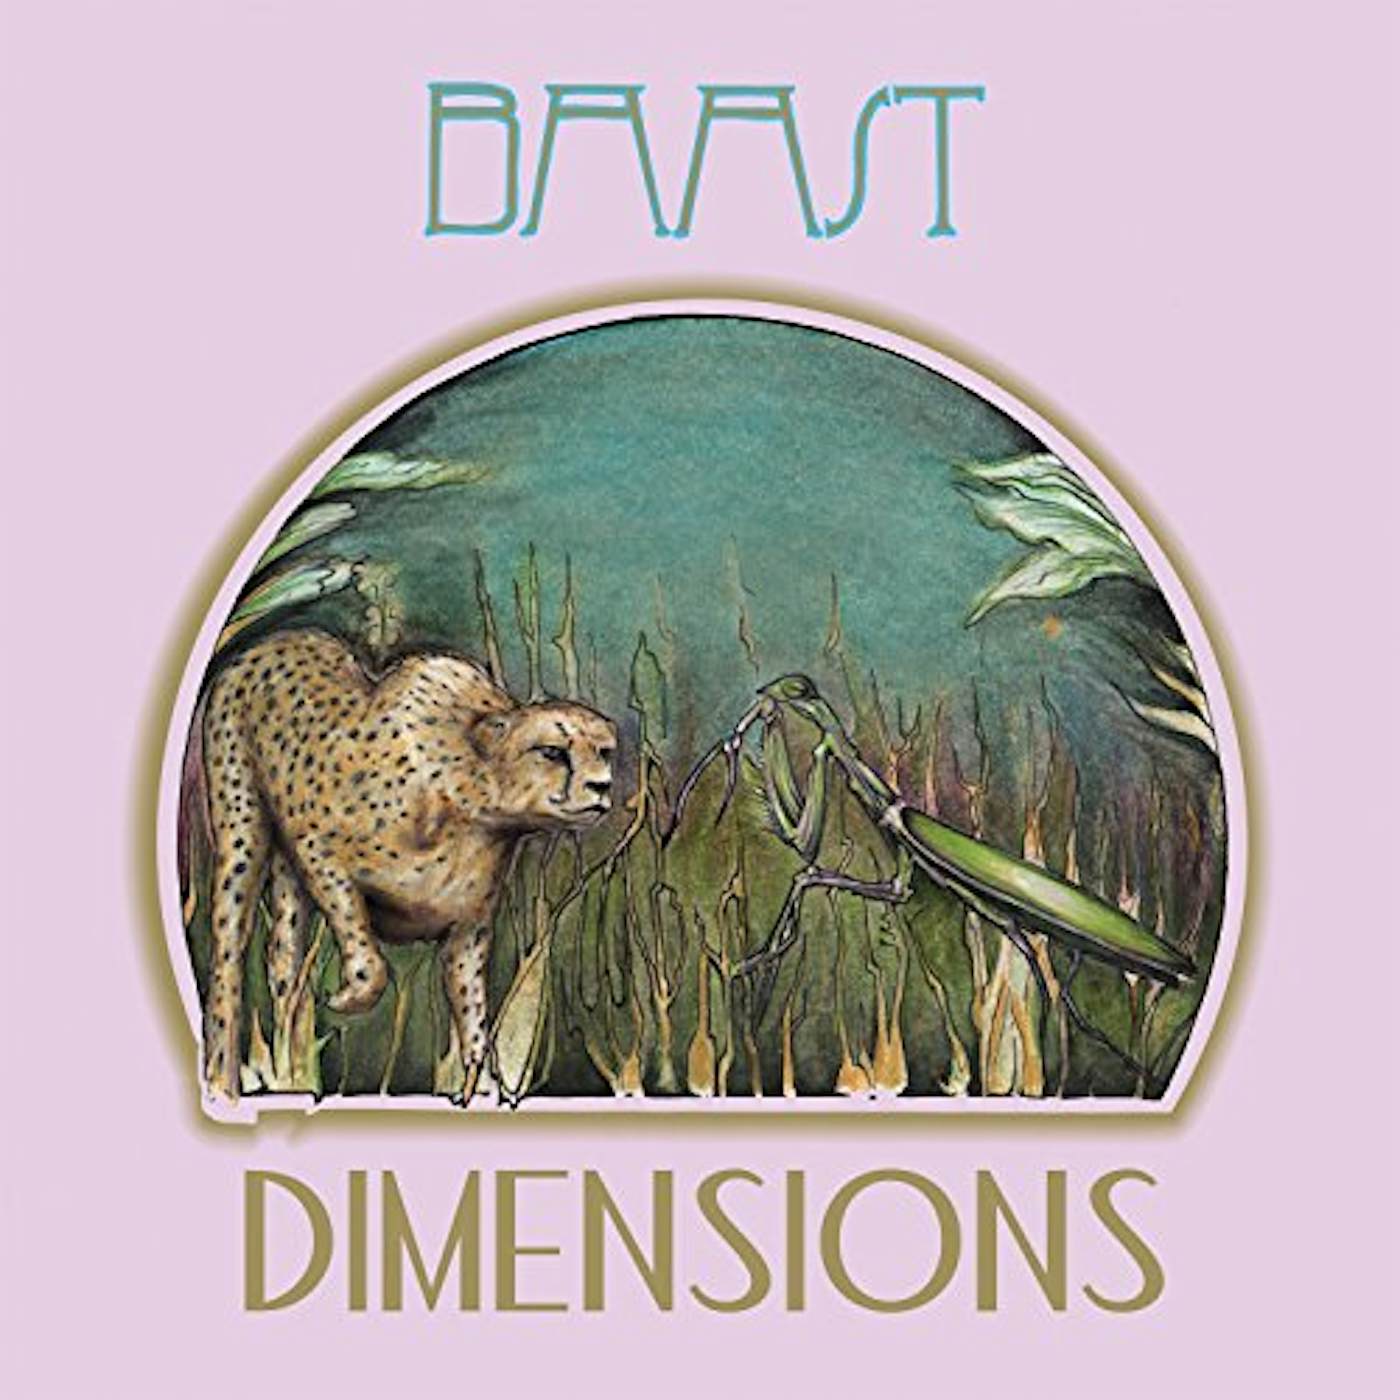 Baast Dimensions Vinyl Record